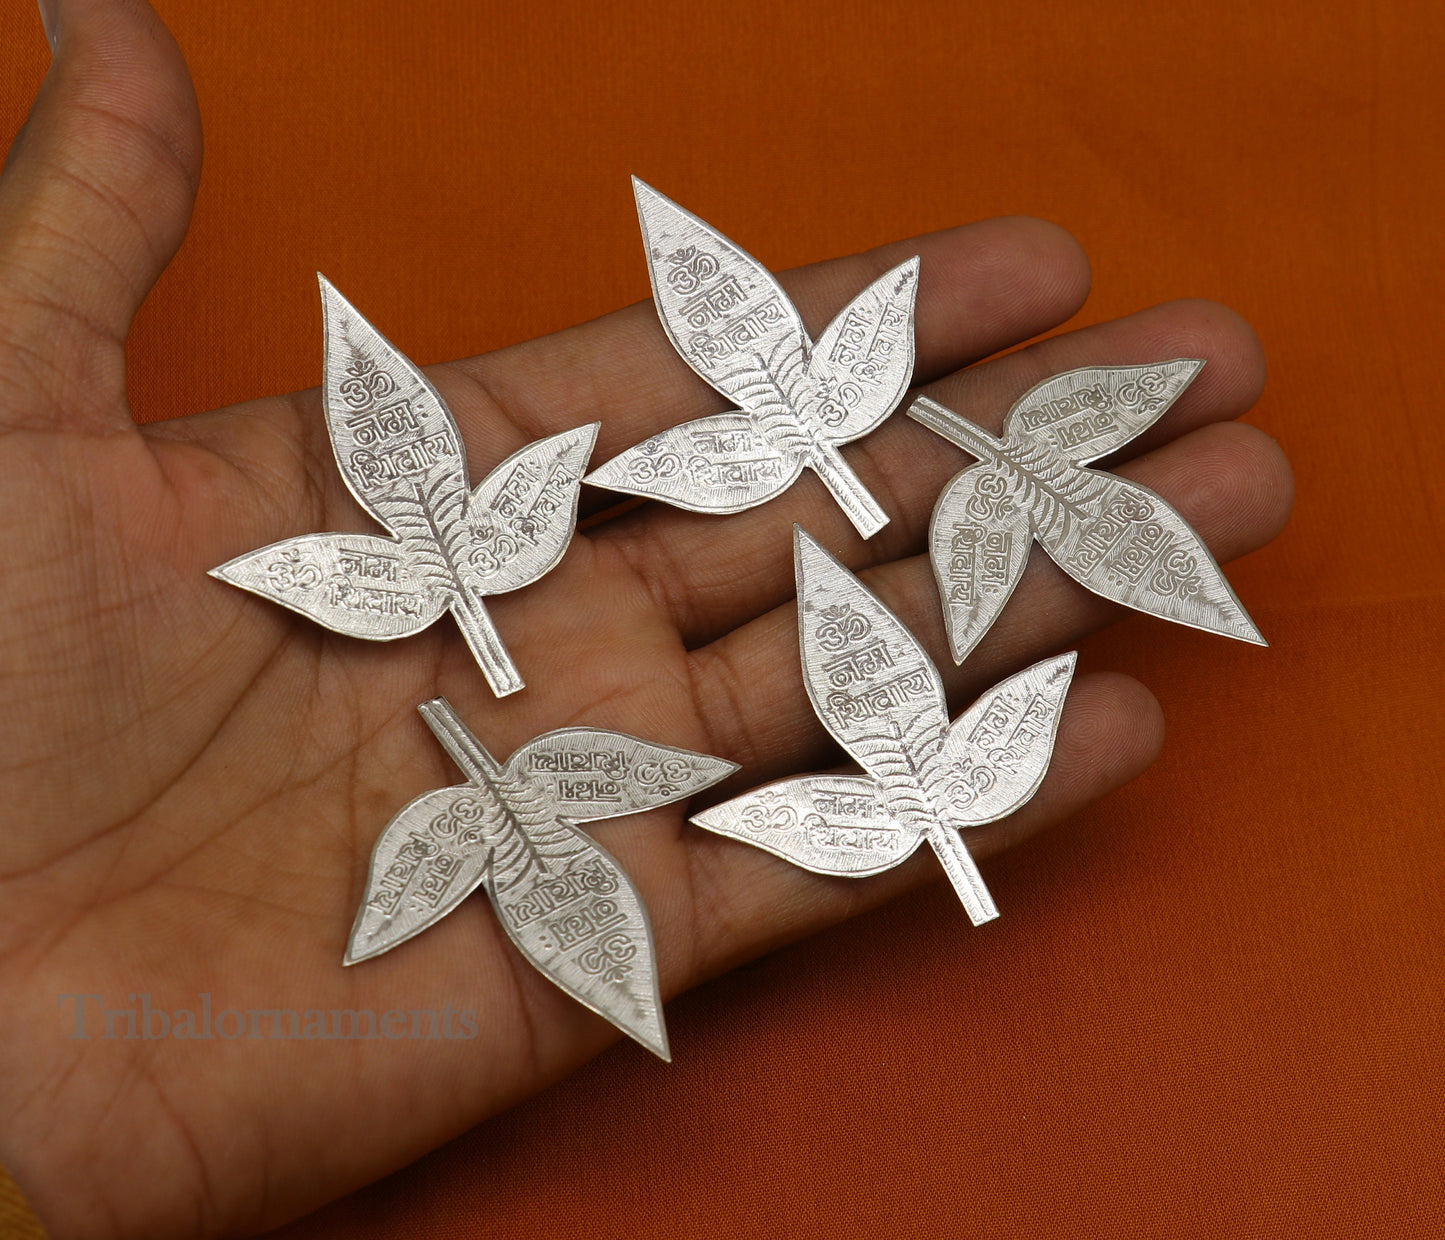 Lot 5 pcs bel Patra Solid silver handmade solid belva patra, shiva worshipping/ puja article, belpatra or belva tree leaves india su508 - TRIBAL ORNAMENTS